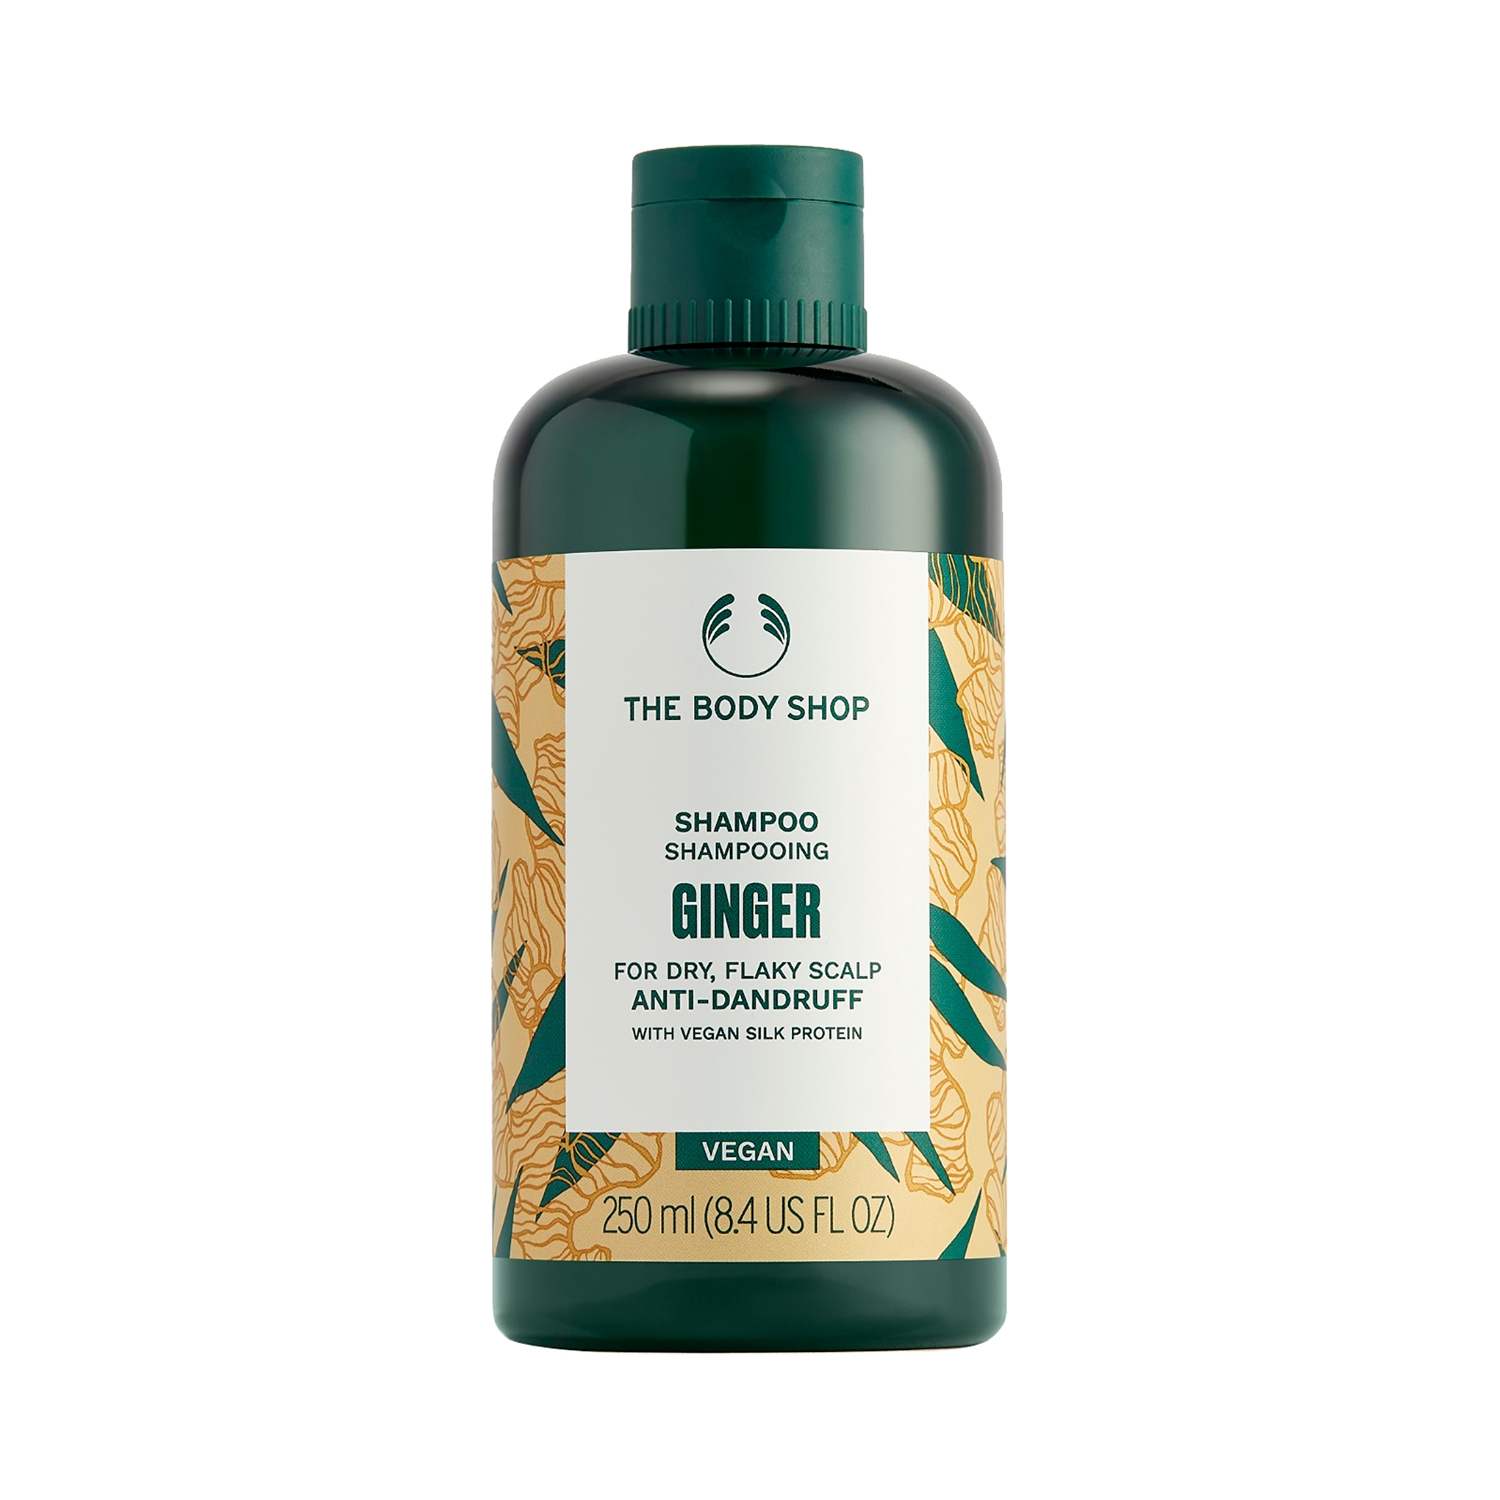 The Body Shop | The Body Shop Ginger Anti-Dandruff Shampoo (250ml)